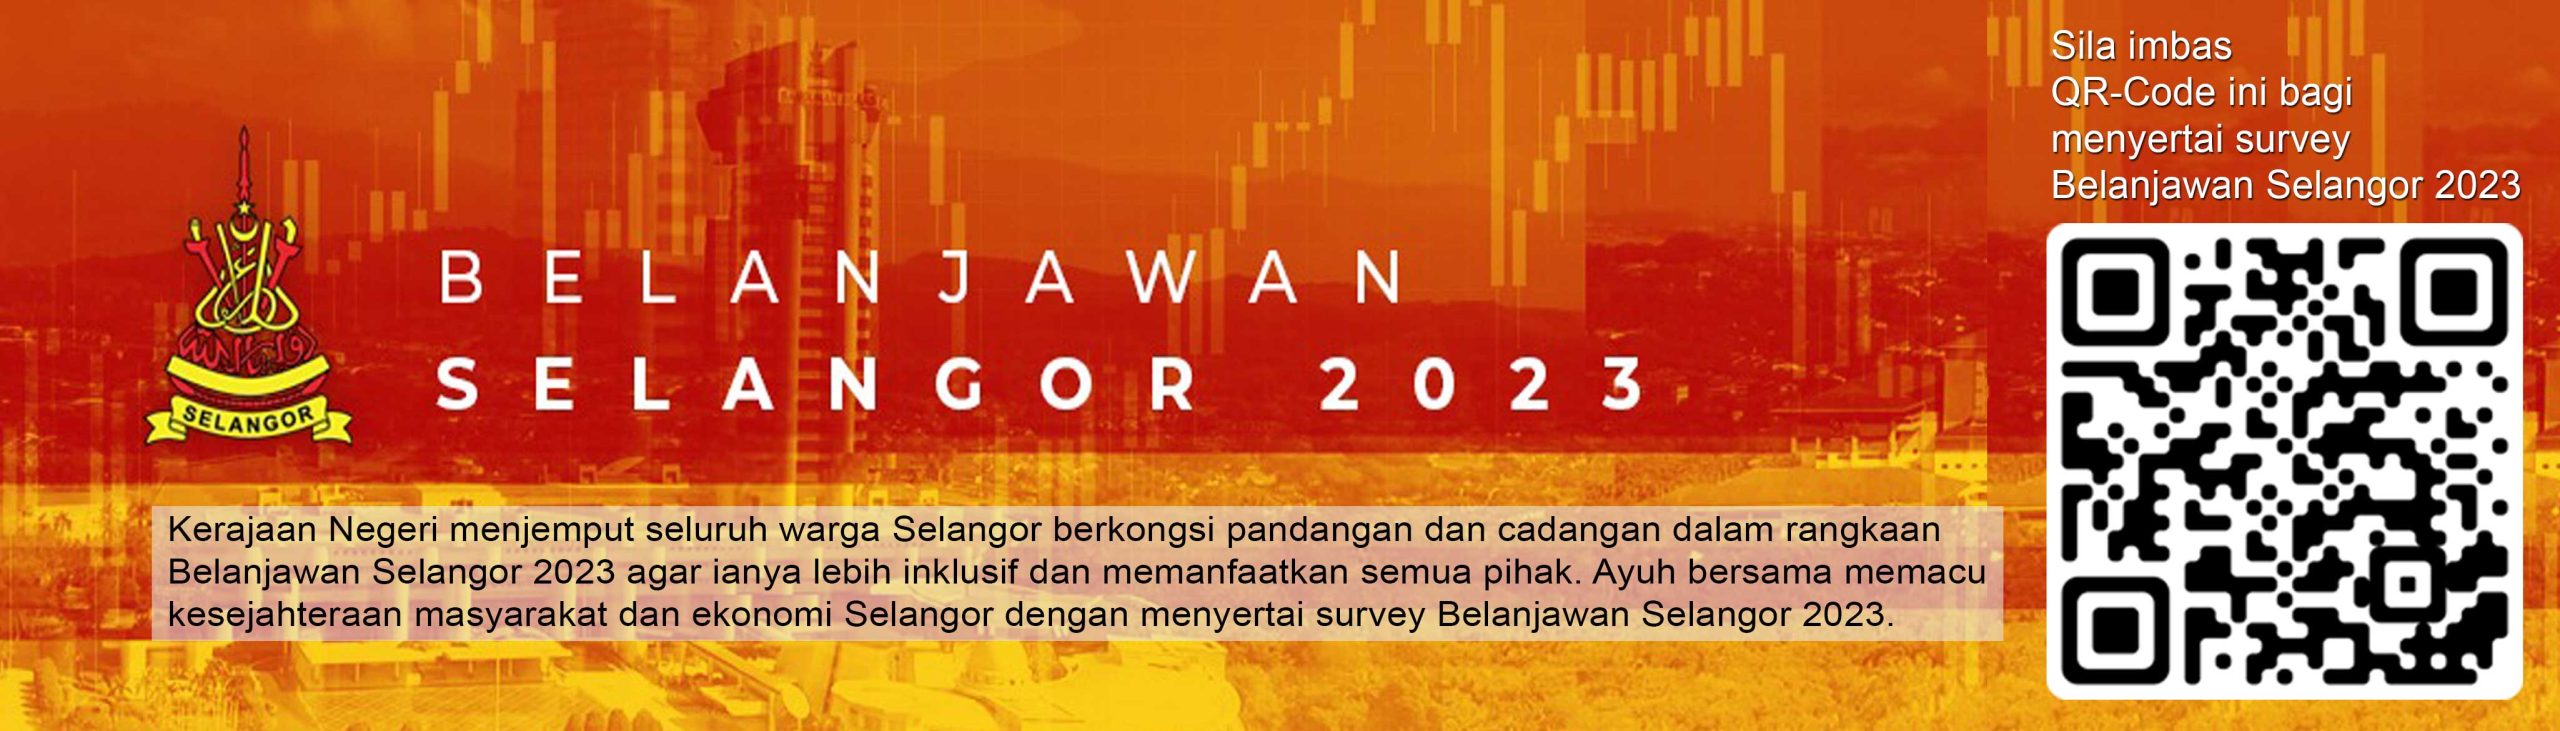 banner-website-belanjawan-selangor-2023